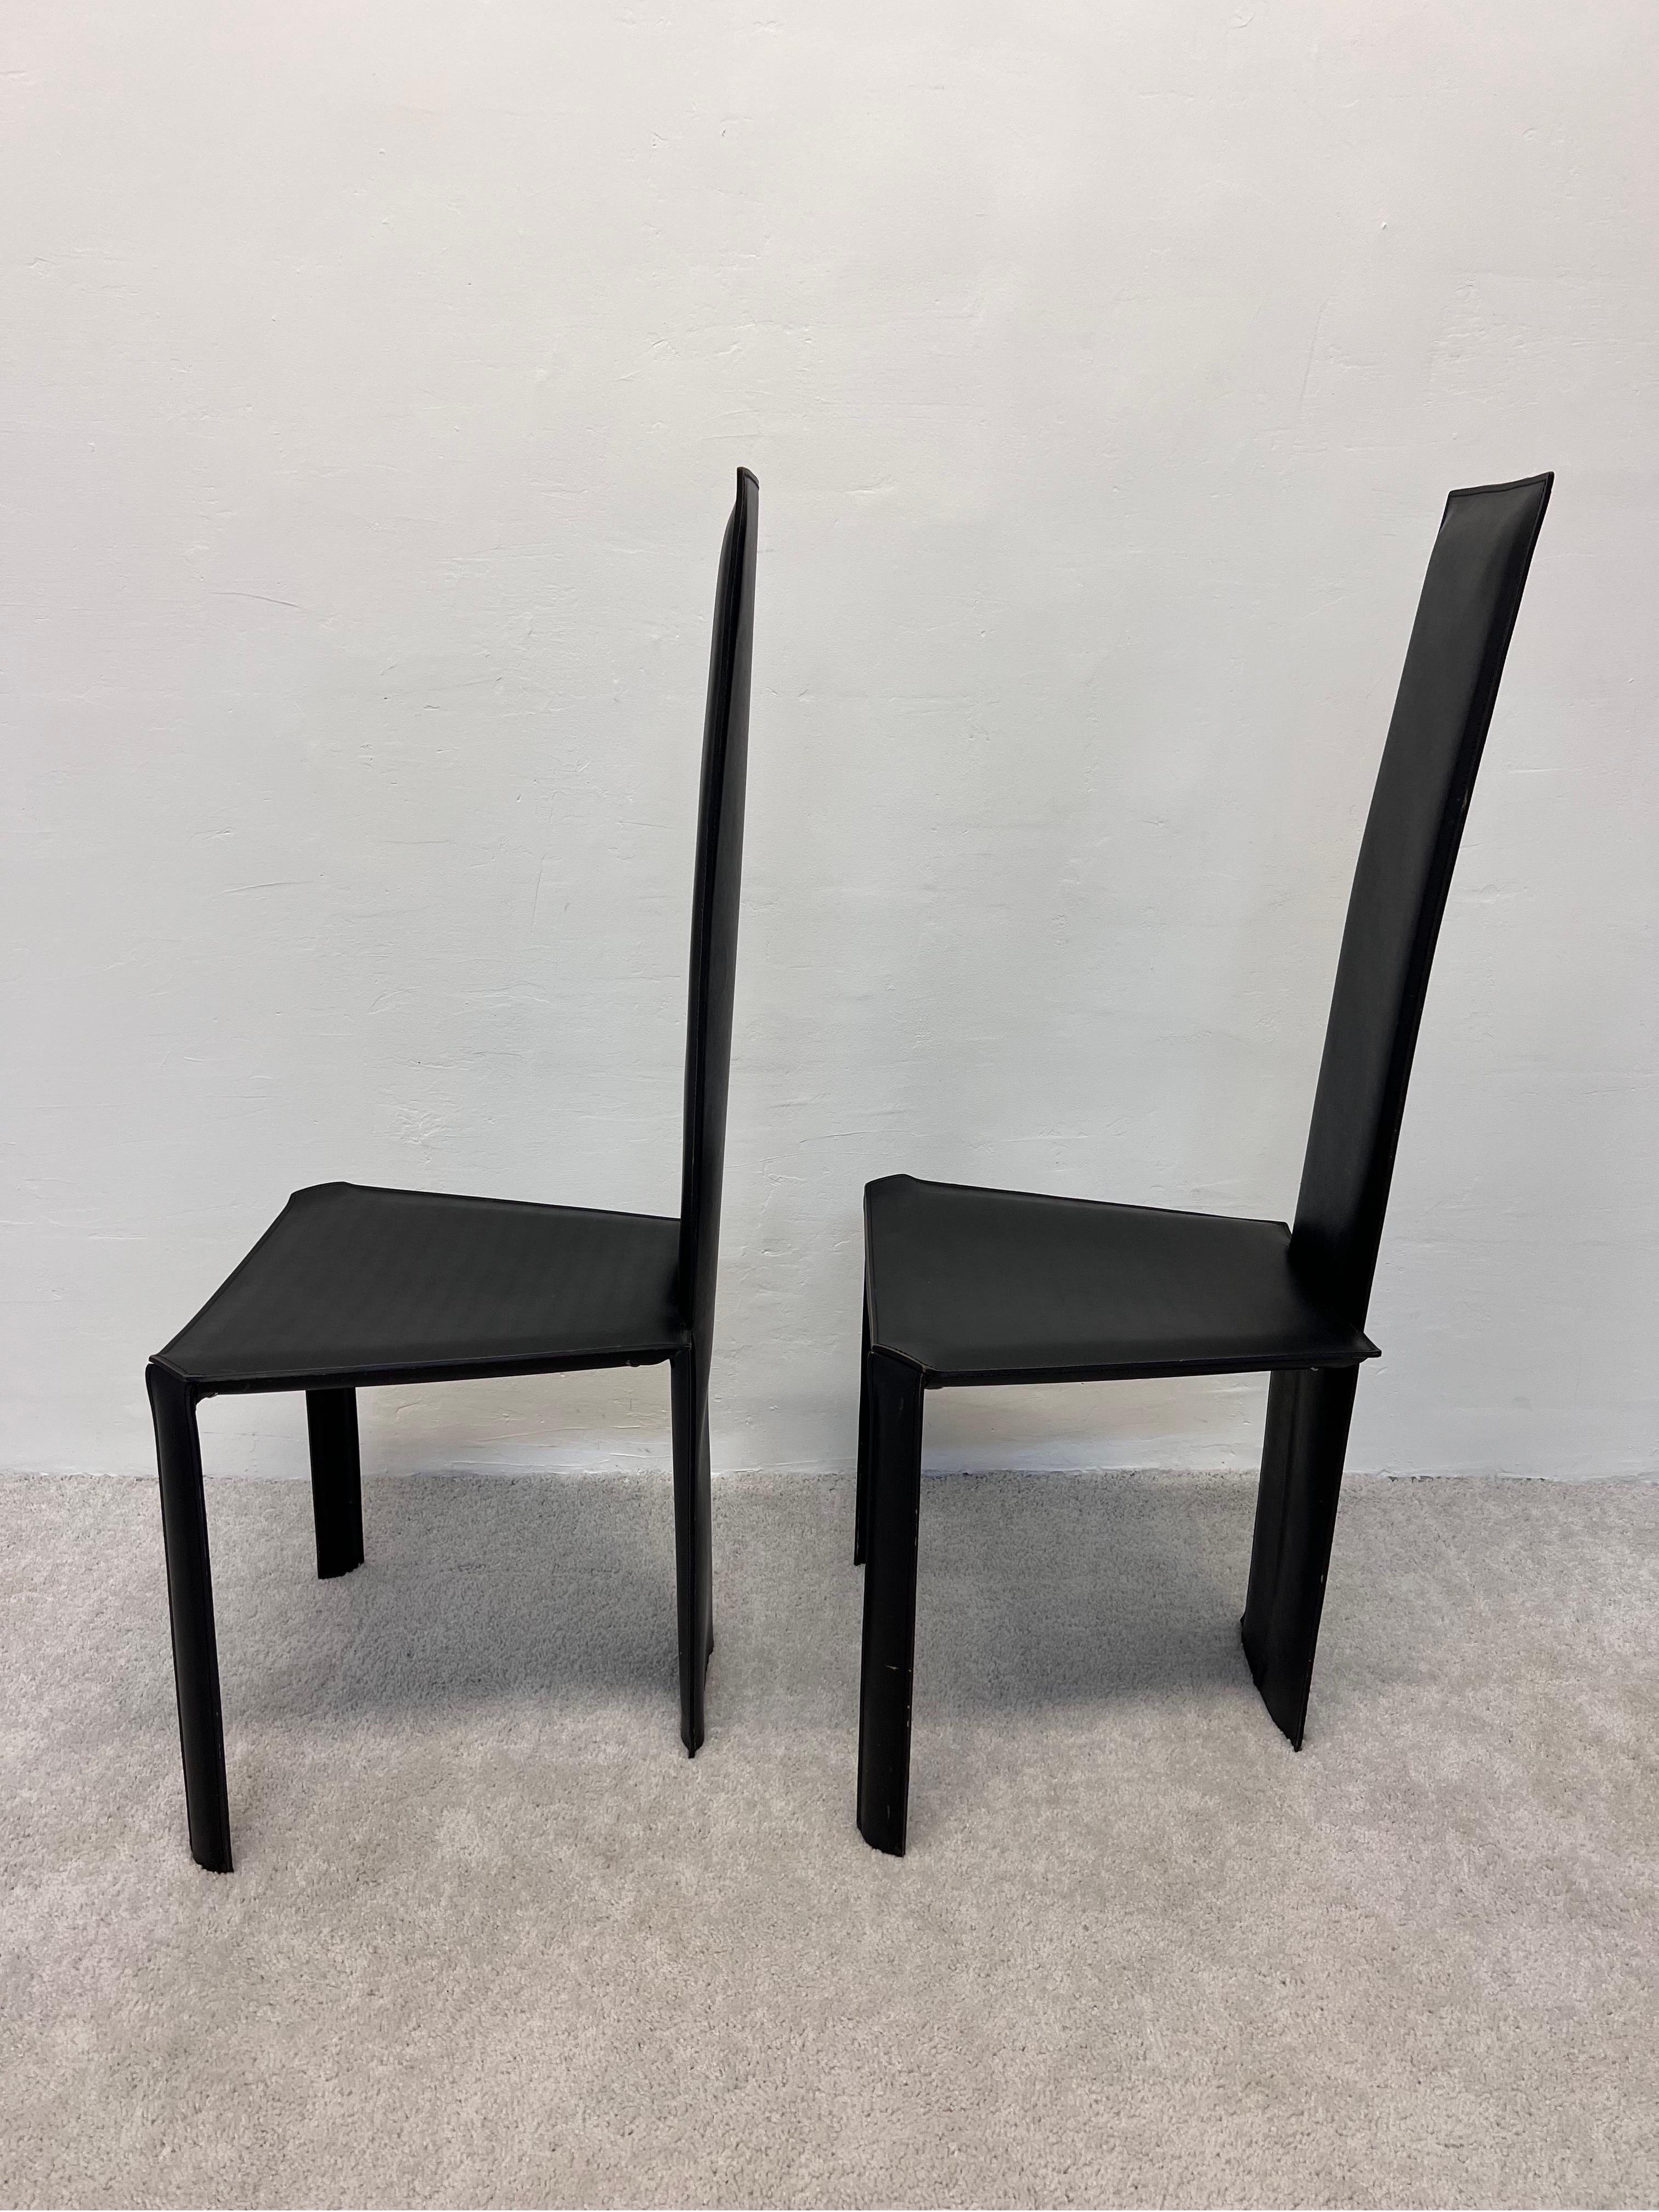 20th Century Mid-Century Brazilian Modern Ligne Roset Black Leather Dining Chairs, a Pair